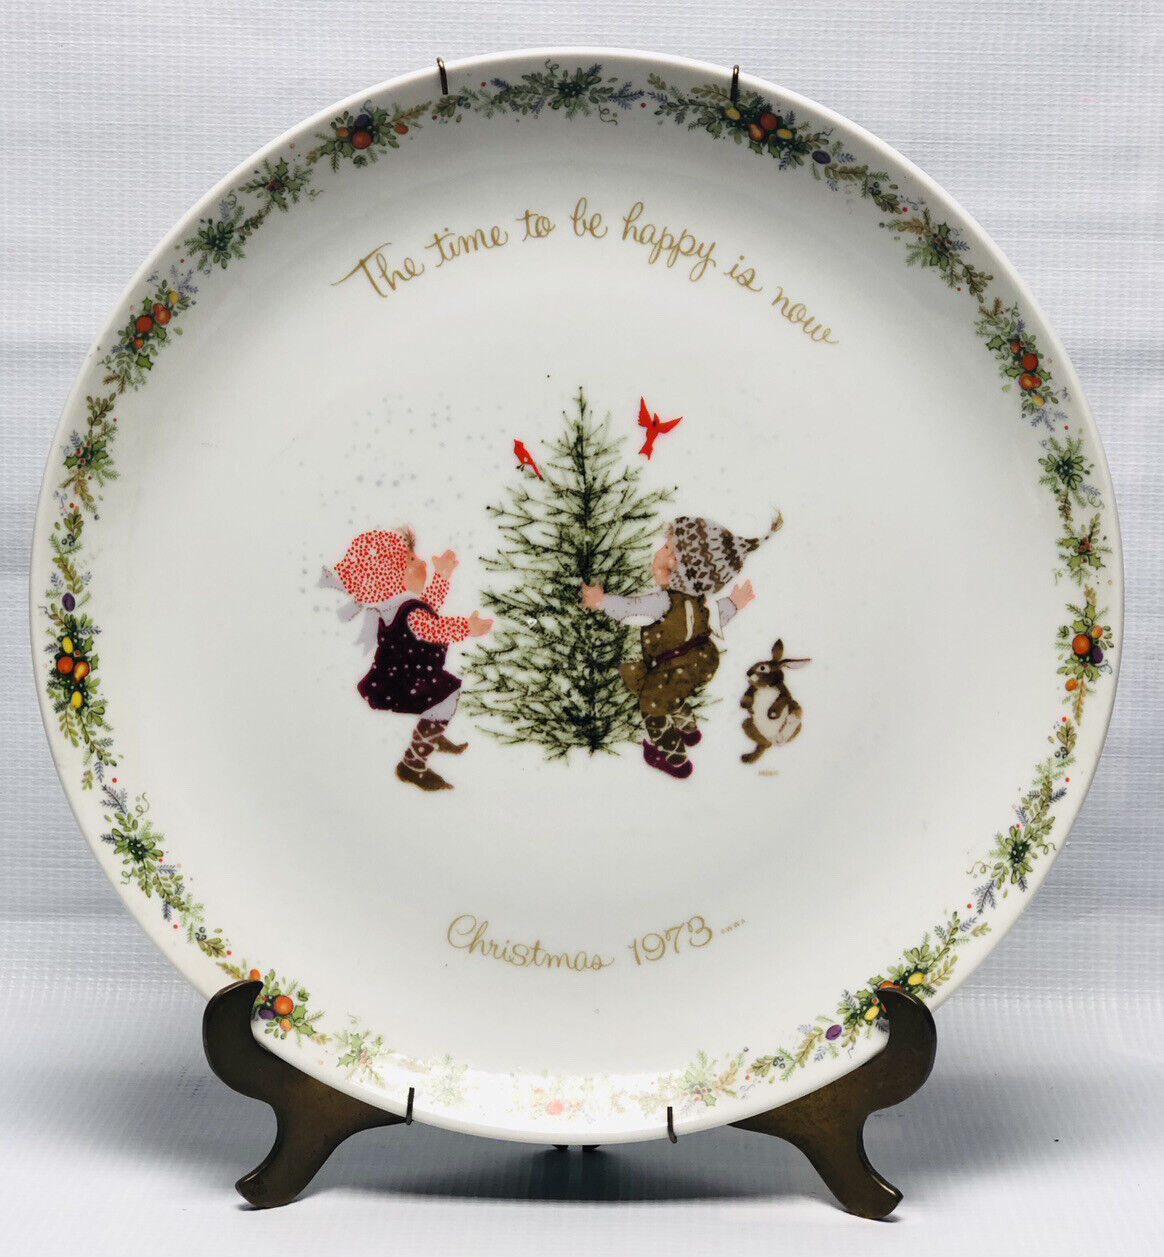 VTG Holly Hobbie Christmas 1973 Porcelain Plate 10 5/8” Commemorative Edition